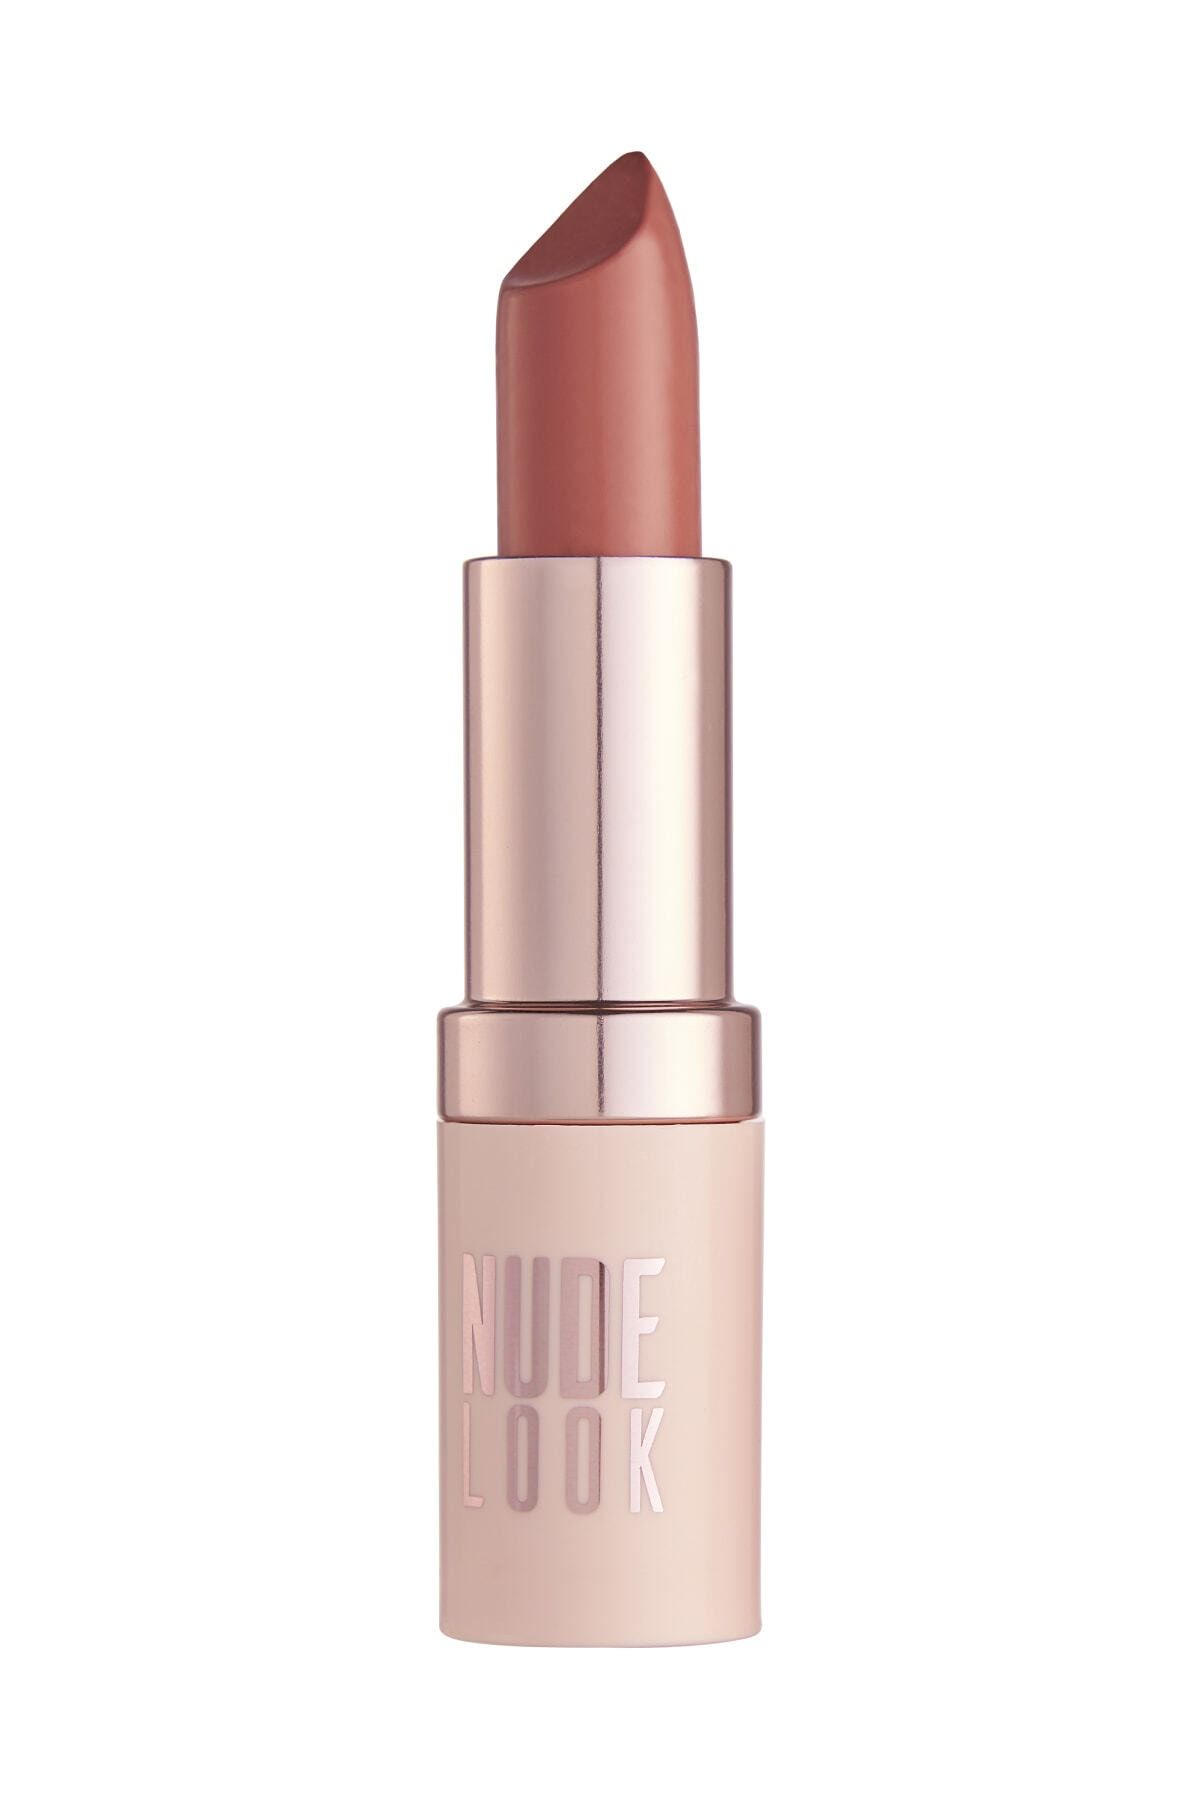 Golden Rose Nude Look Perfect Matte Lipstick No: 02 Peachy Nude - Mat Ruj